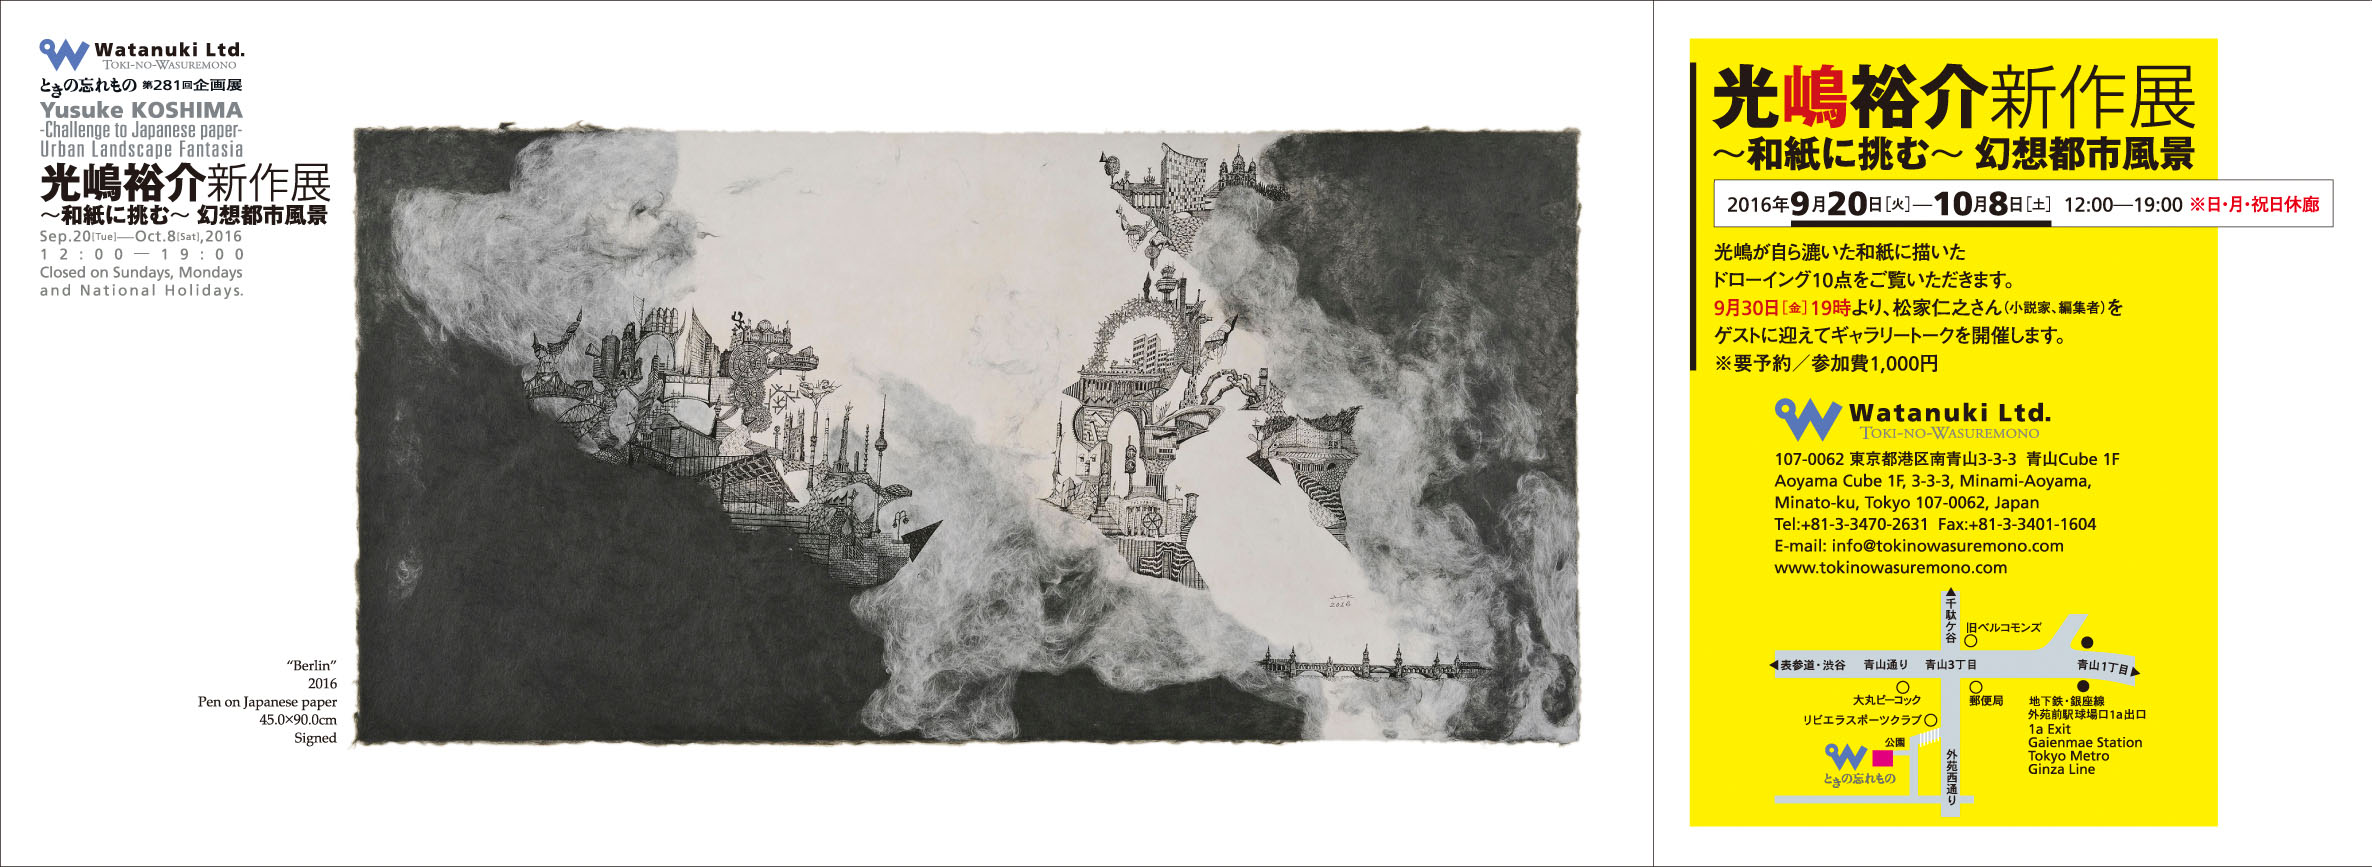 Yusuke Koshima Challenging Japanese Paper Toki No Wasuremono Tokyo Art Beat